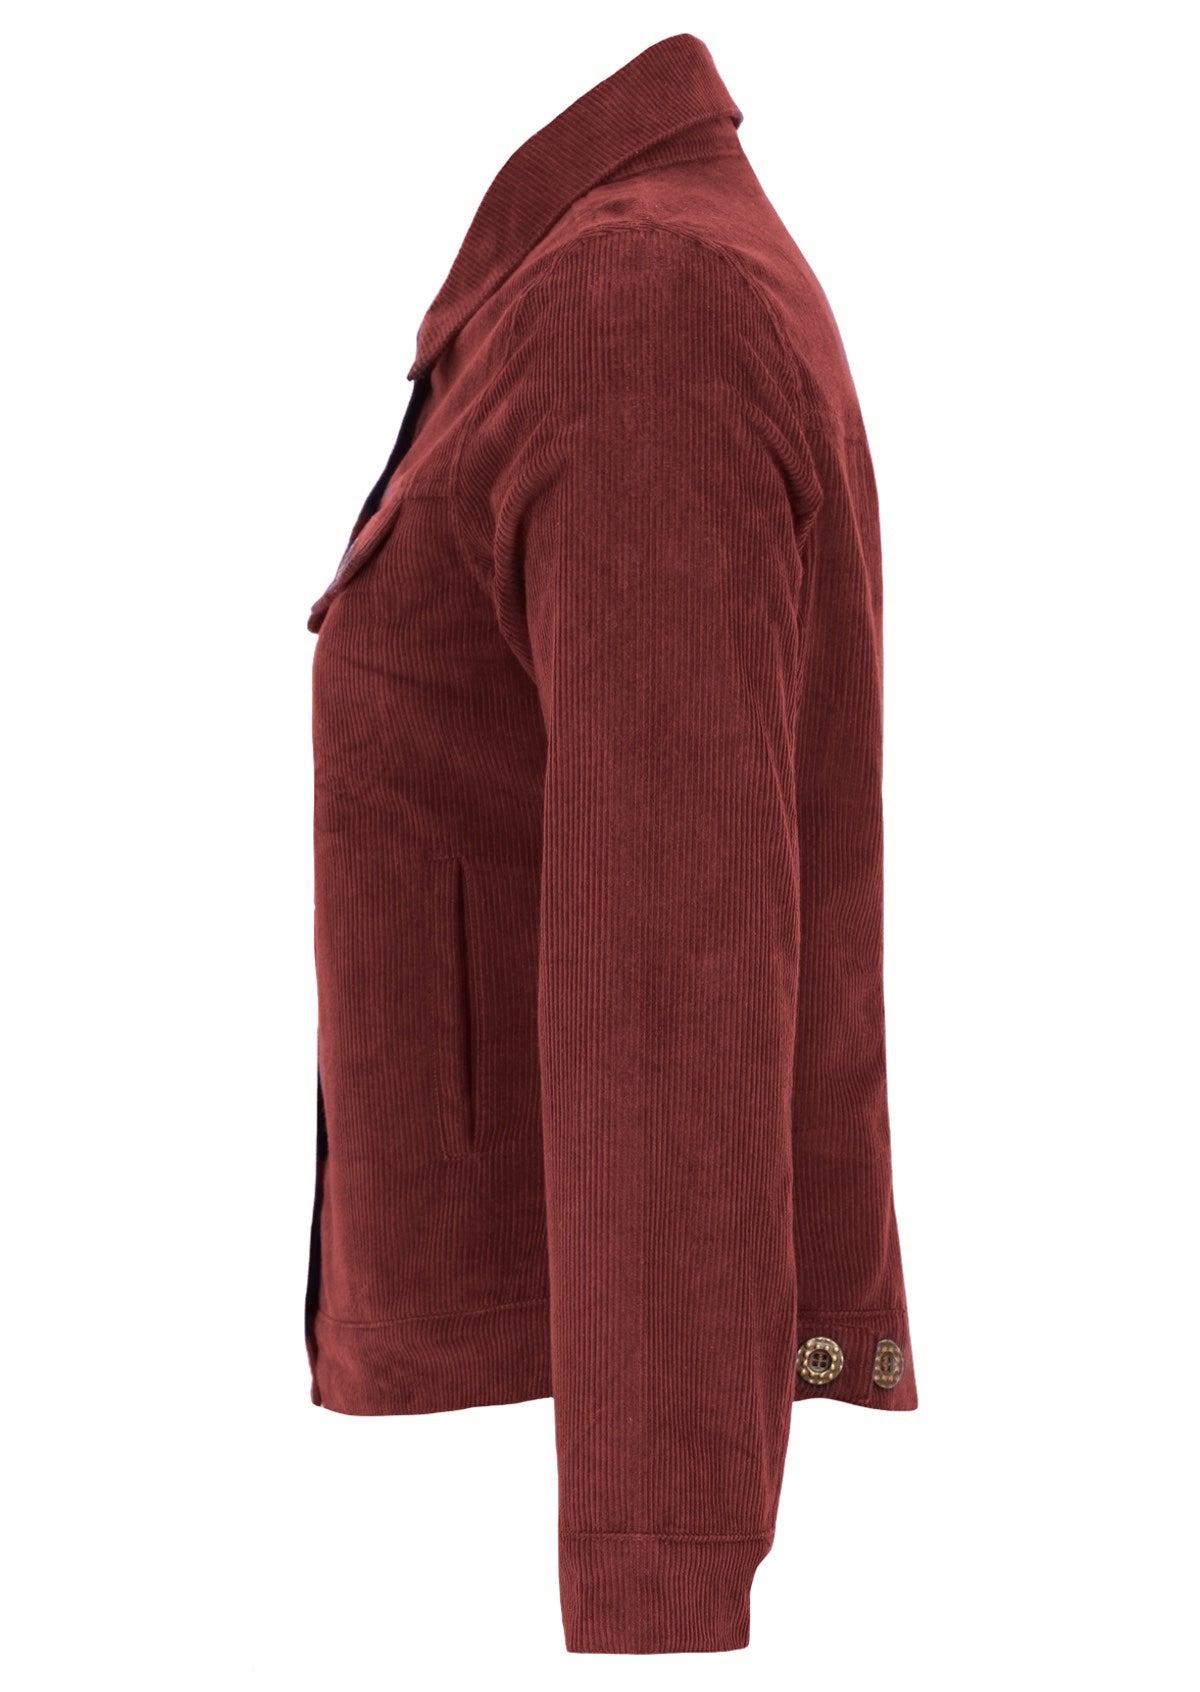 Zinfandel red corduroy jacket has 4 pockets. 